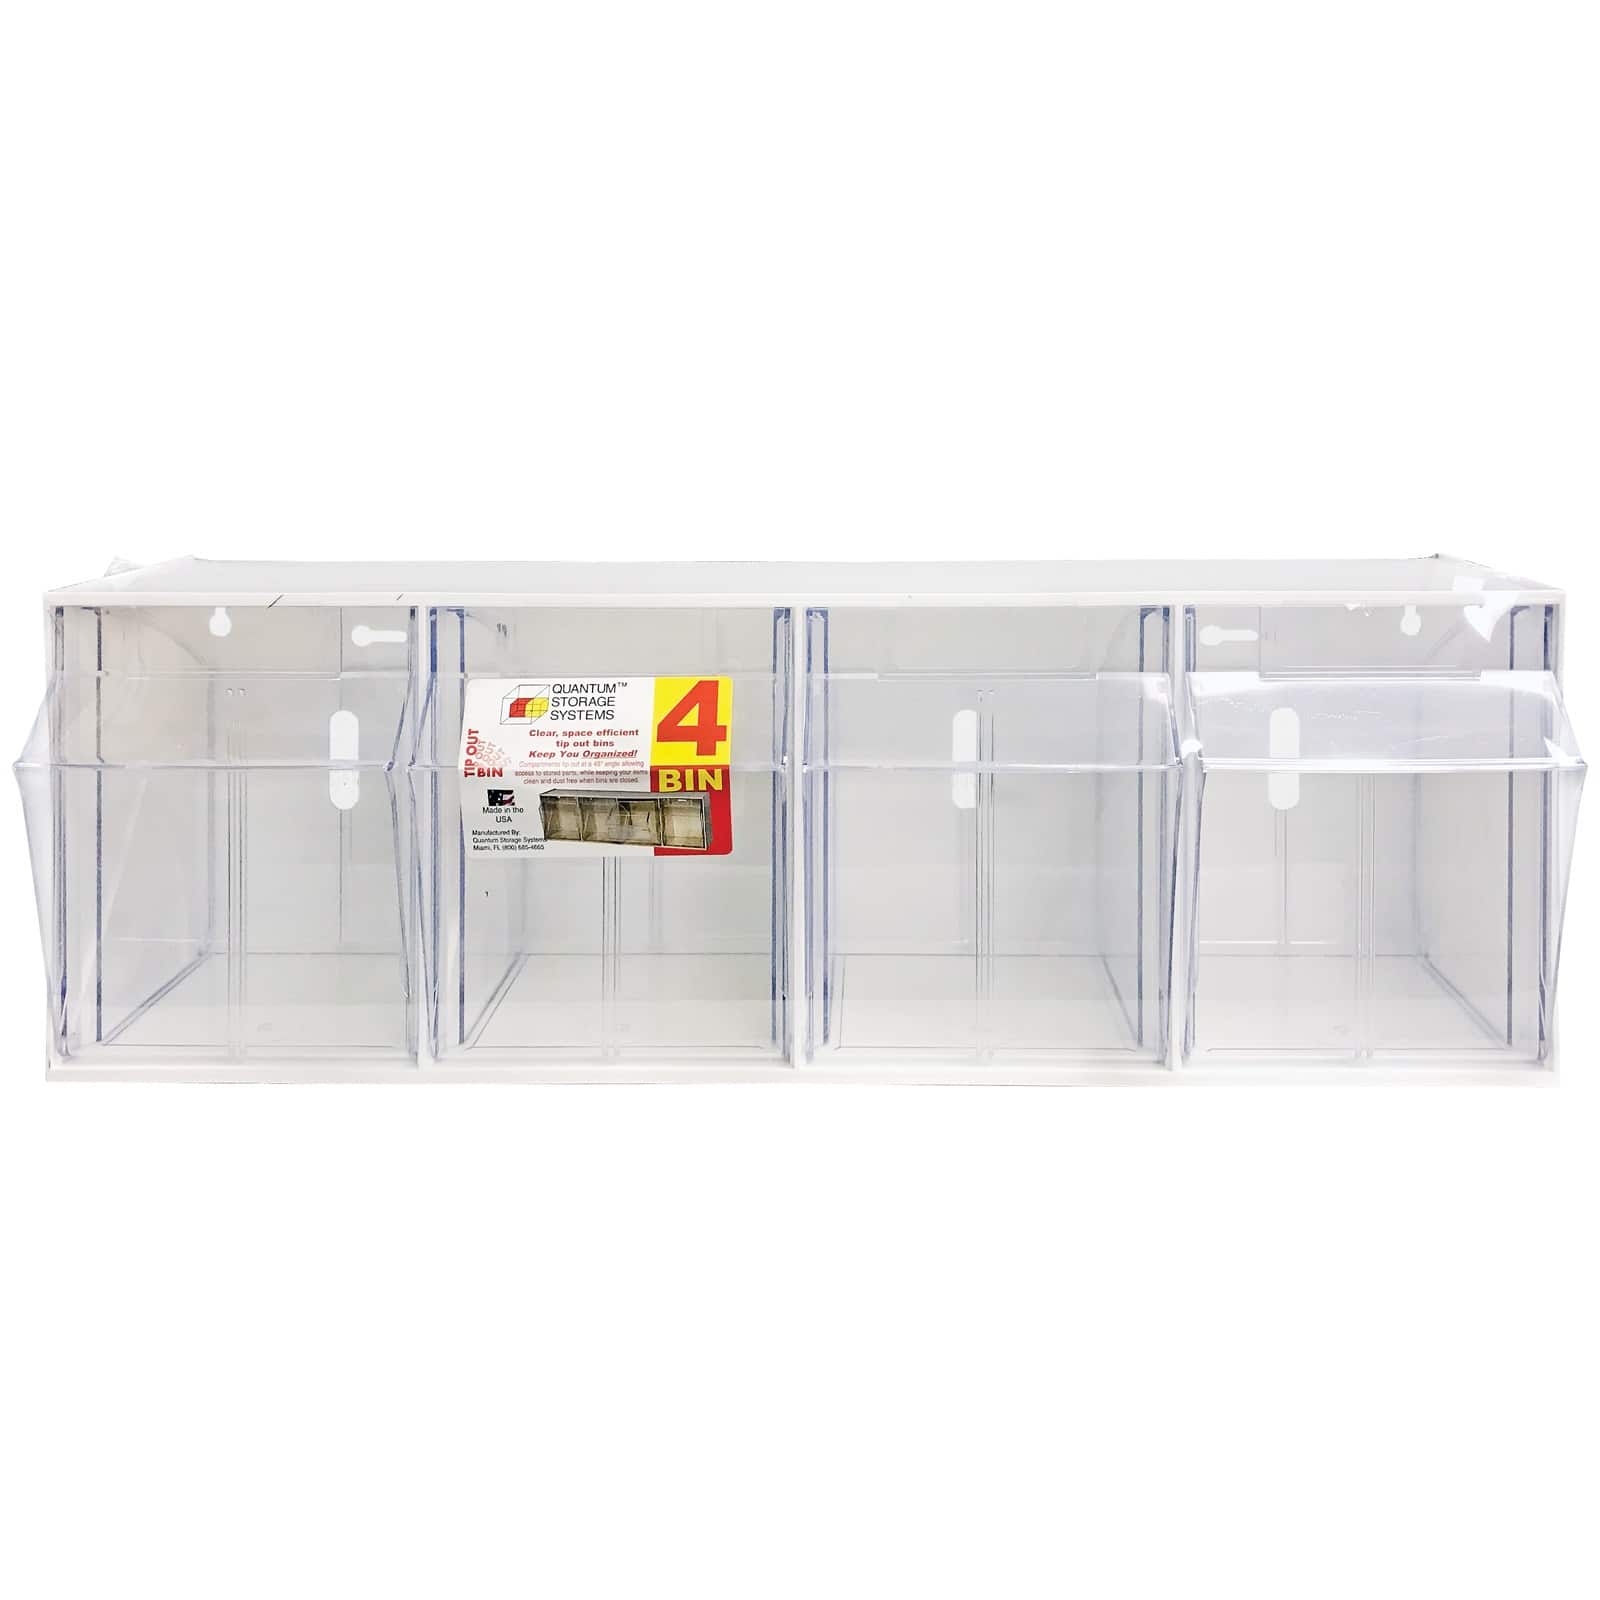 Clear Plastic Storage Box w\/ Compartments